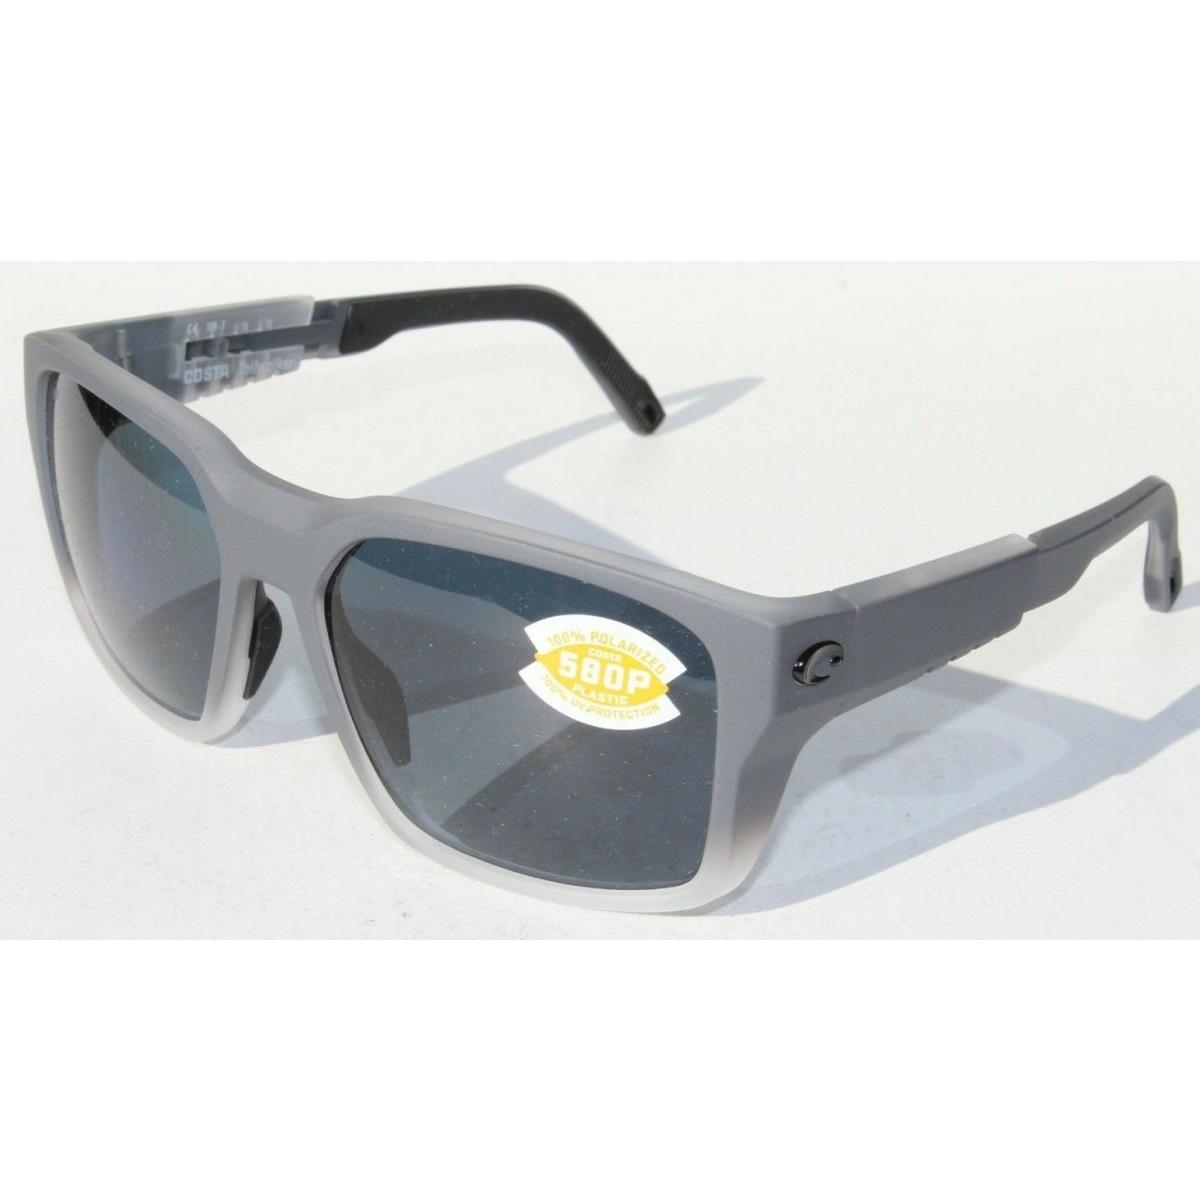 Costa Del Mar sunglasses Tailwalker - Frame: Gray, Lens: Gray 0